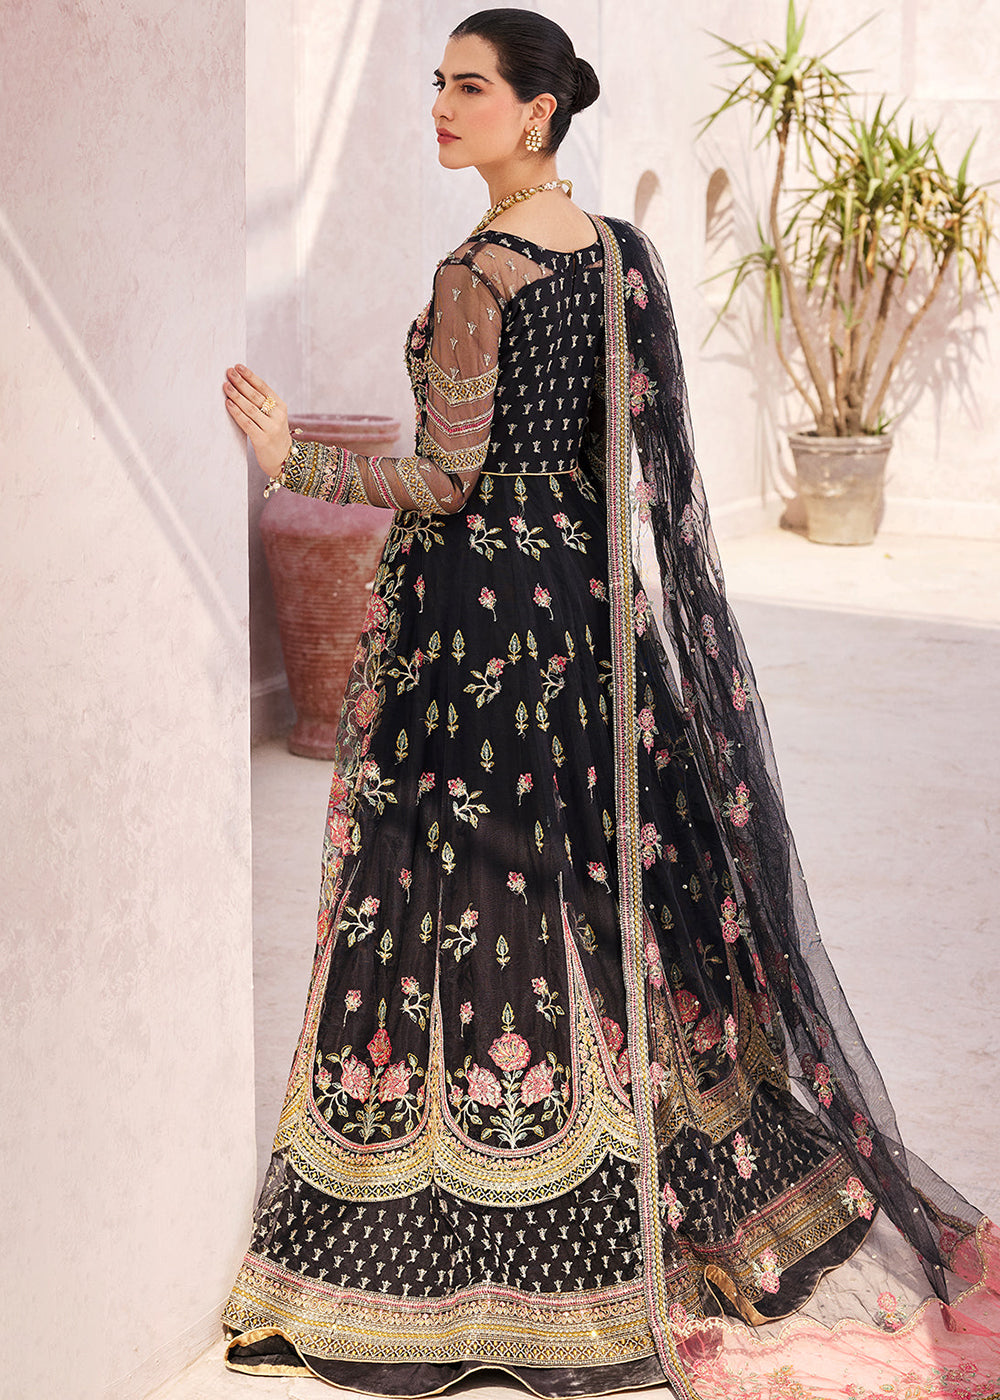 Buy Now Black Maxi Dress | Emaan Adeel | Mirha Wedding Edition '23 | MH-205 Online in USA, UK, Canada & Worldwide at Empress Clothing. 